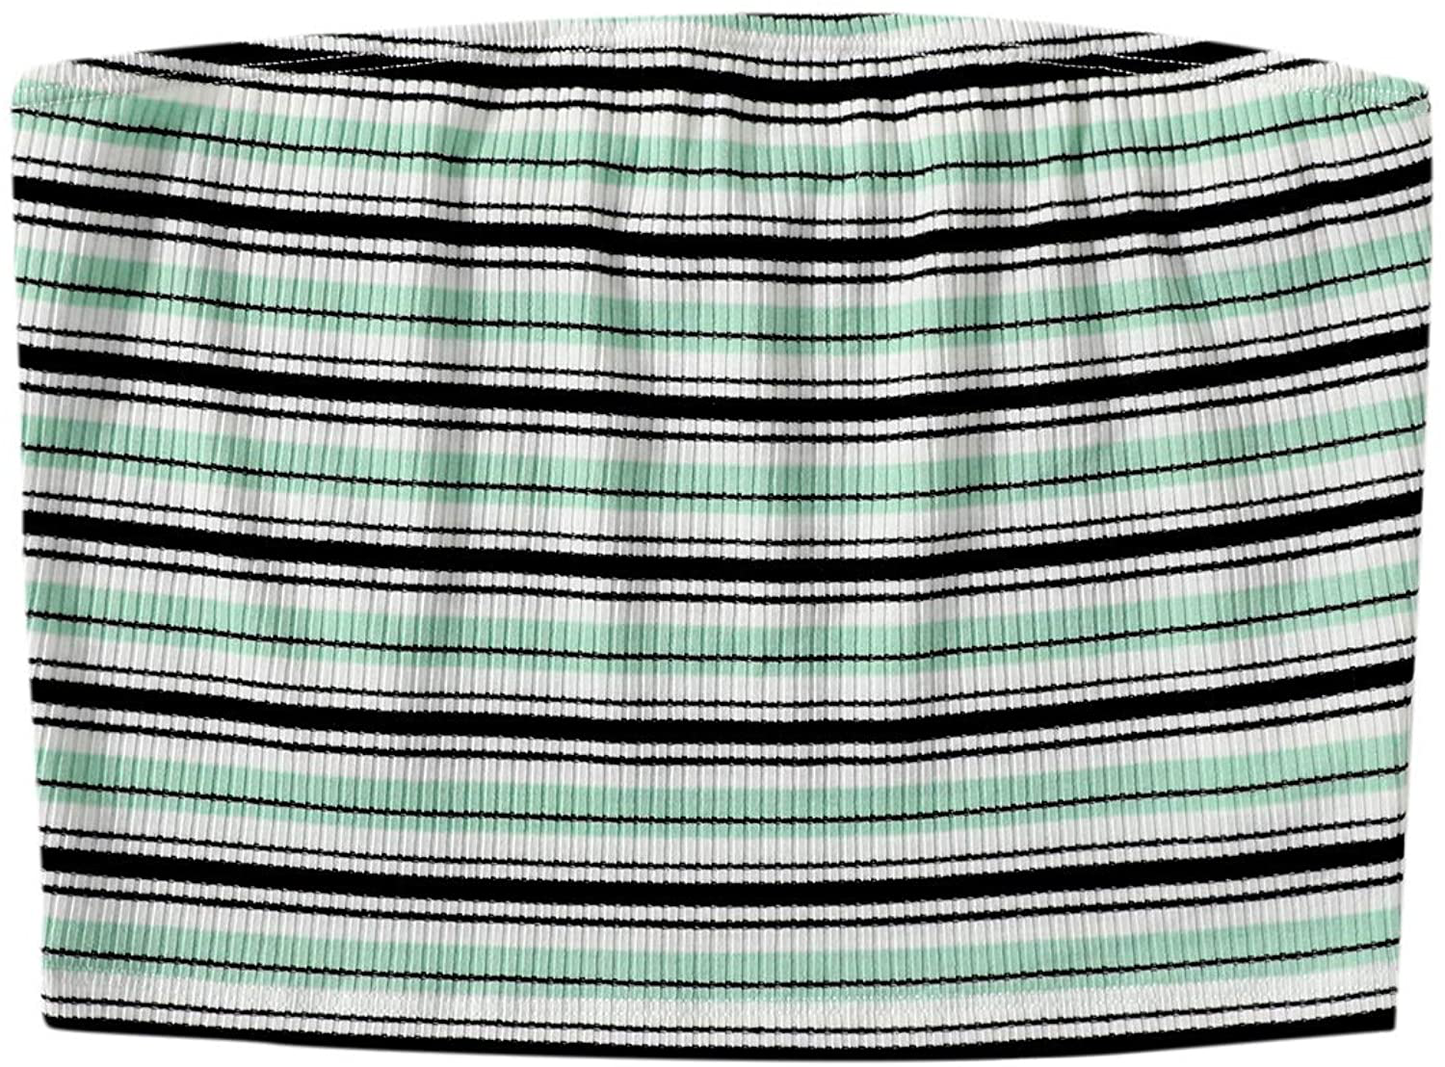 MAKEMECHIC Women's Striped Strapless Sleeveless Bandeau Tube Crop Top